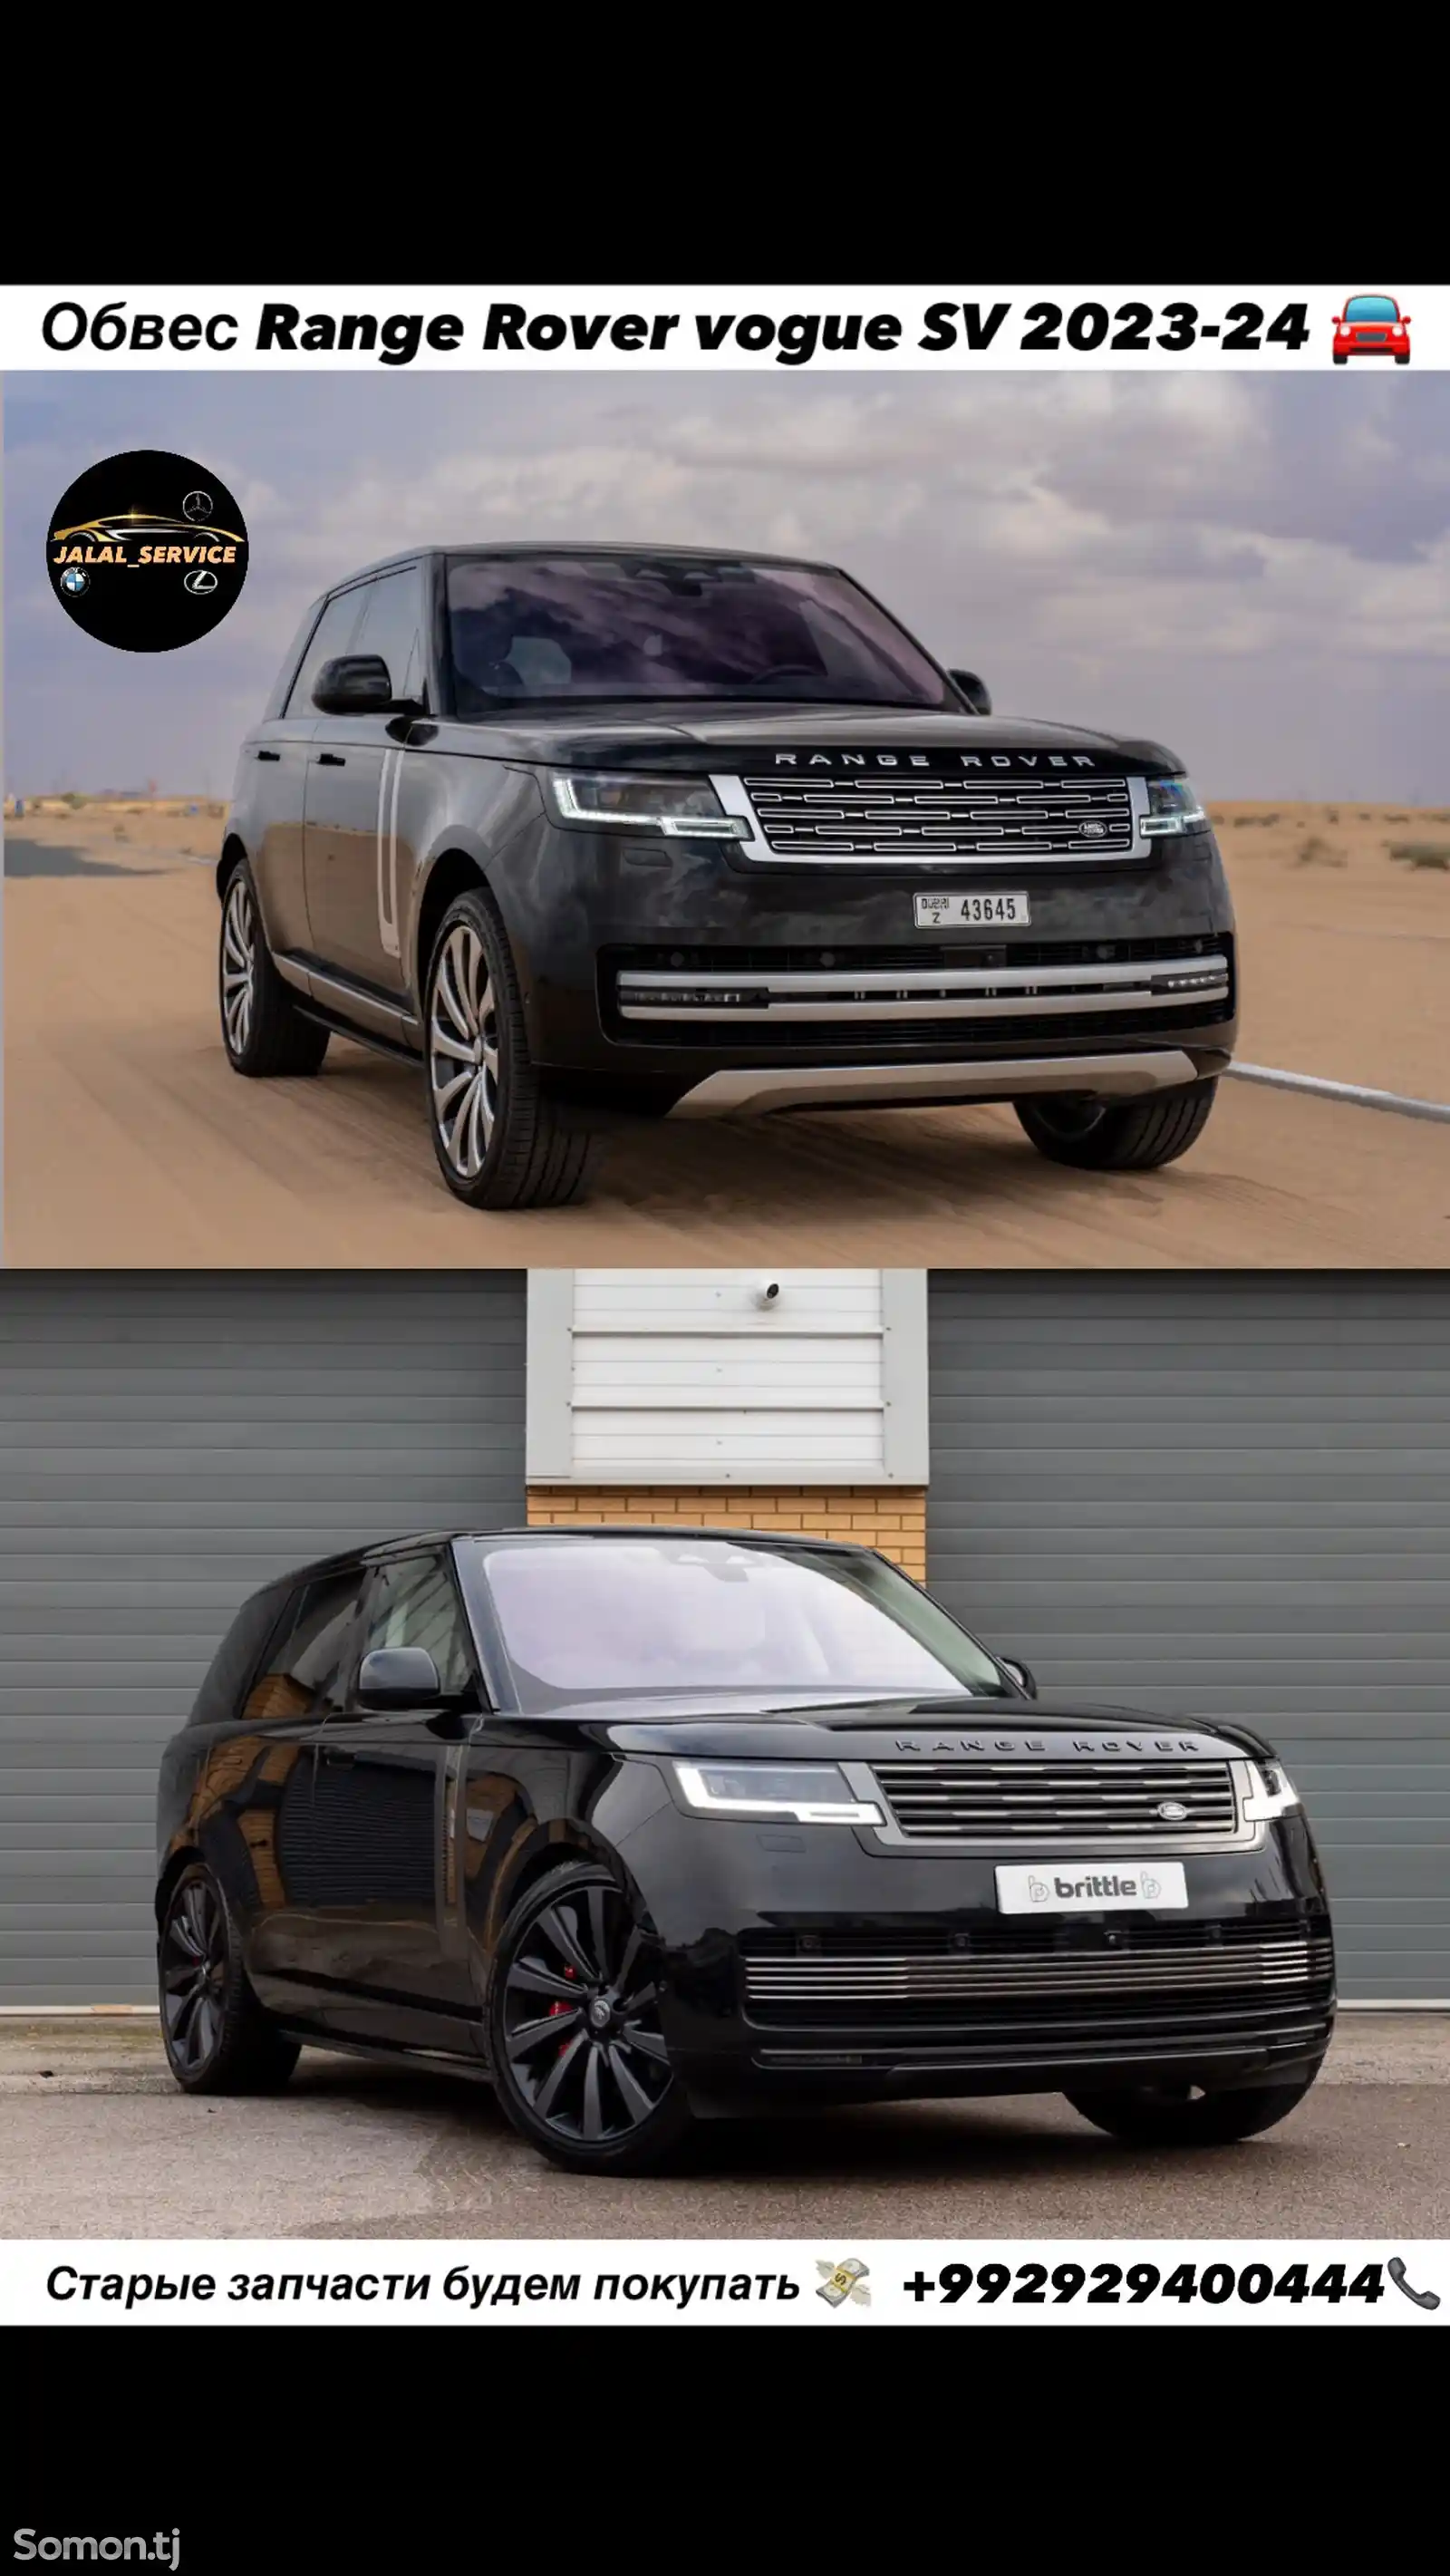 Обвес на Range Rover Vogue SV 2023-24-1